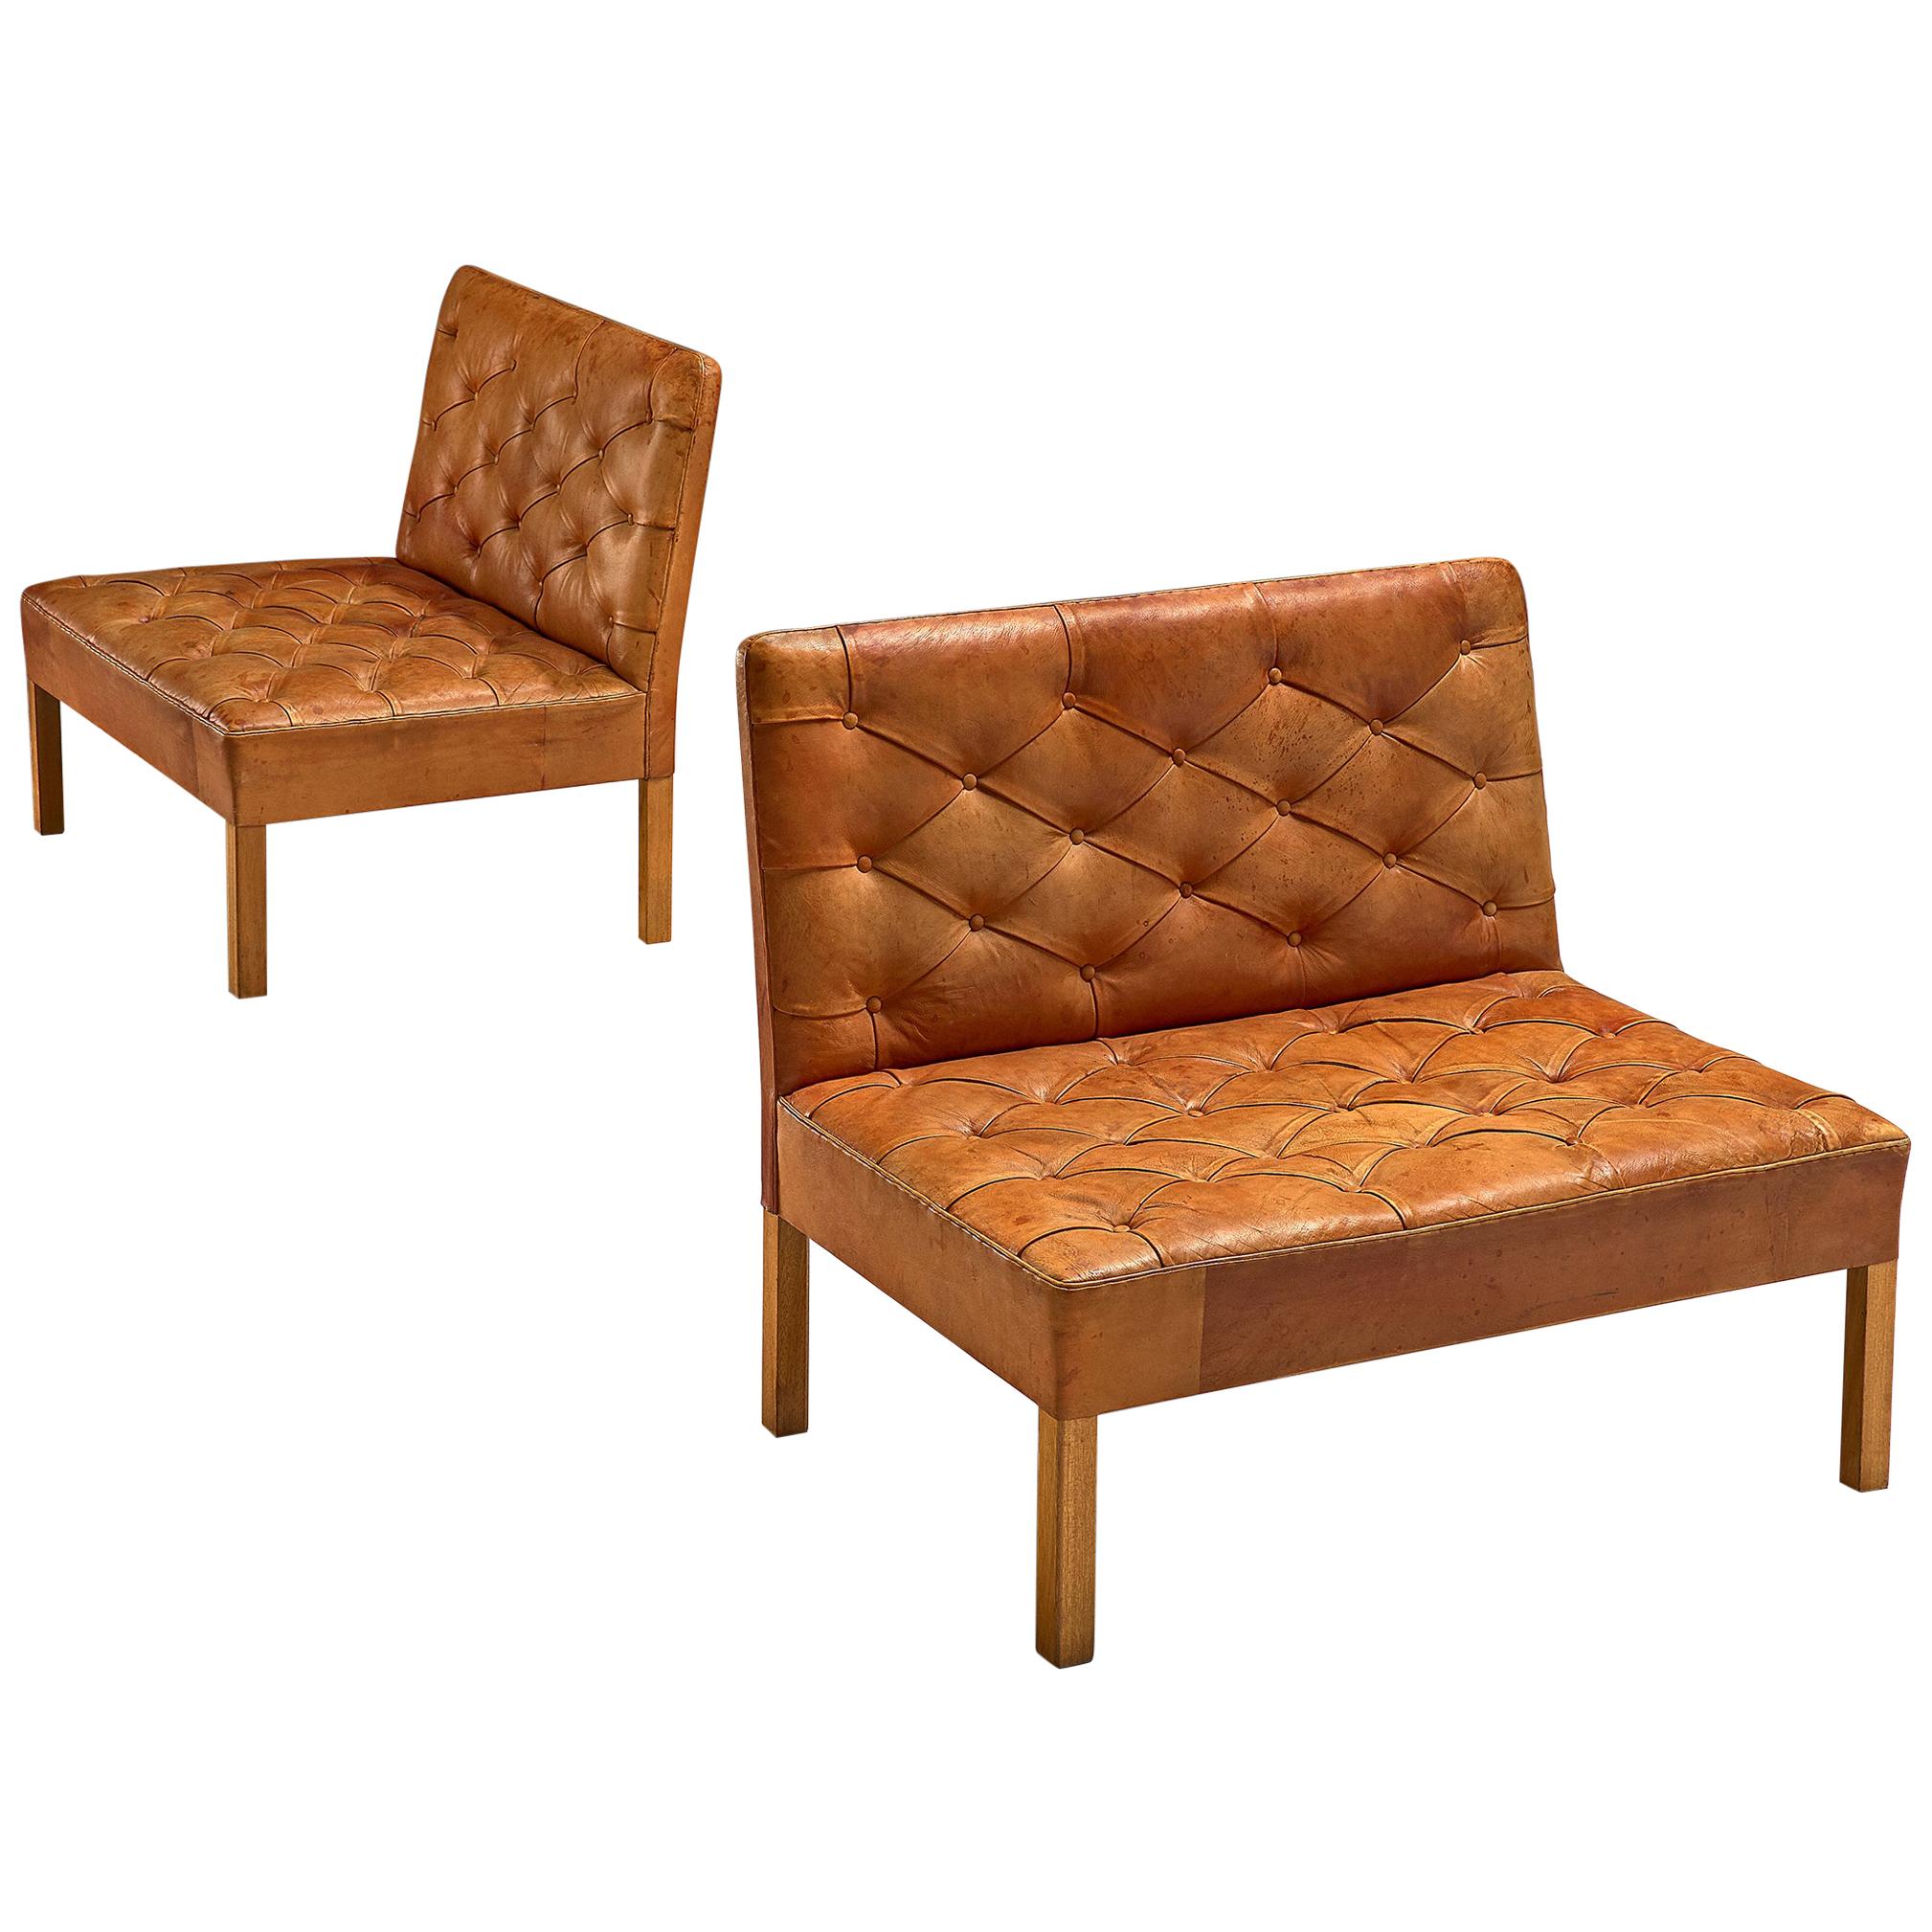 Kaare Klint 'Addition' Sofa's in Original Patinated Cognac Leather